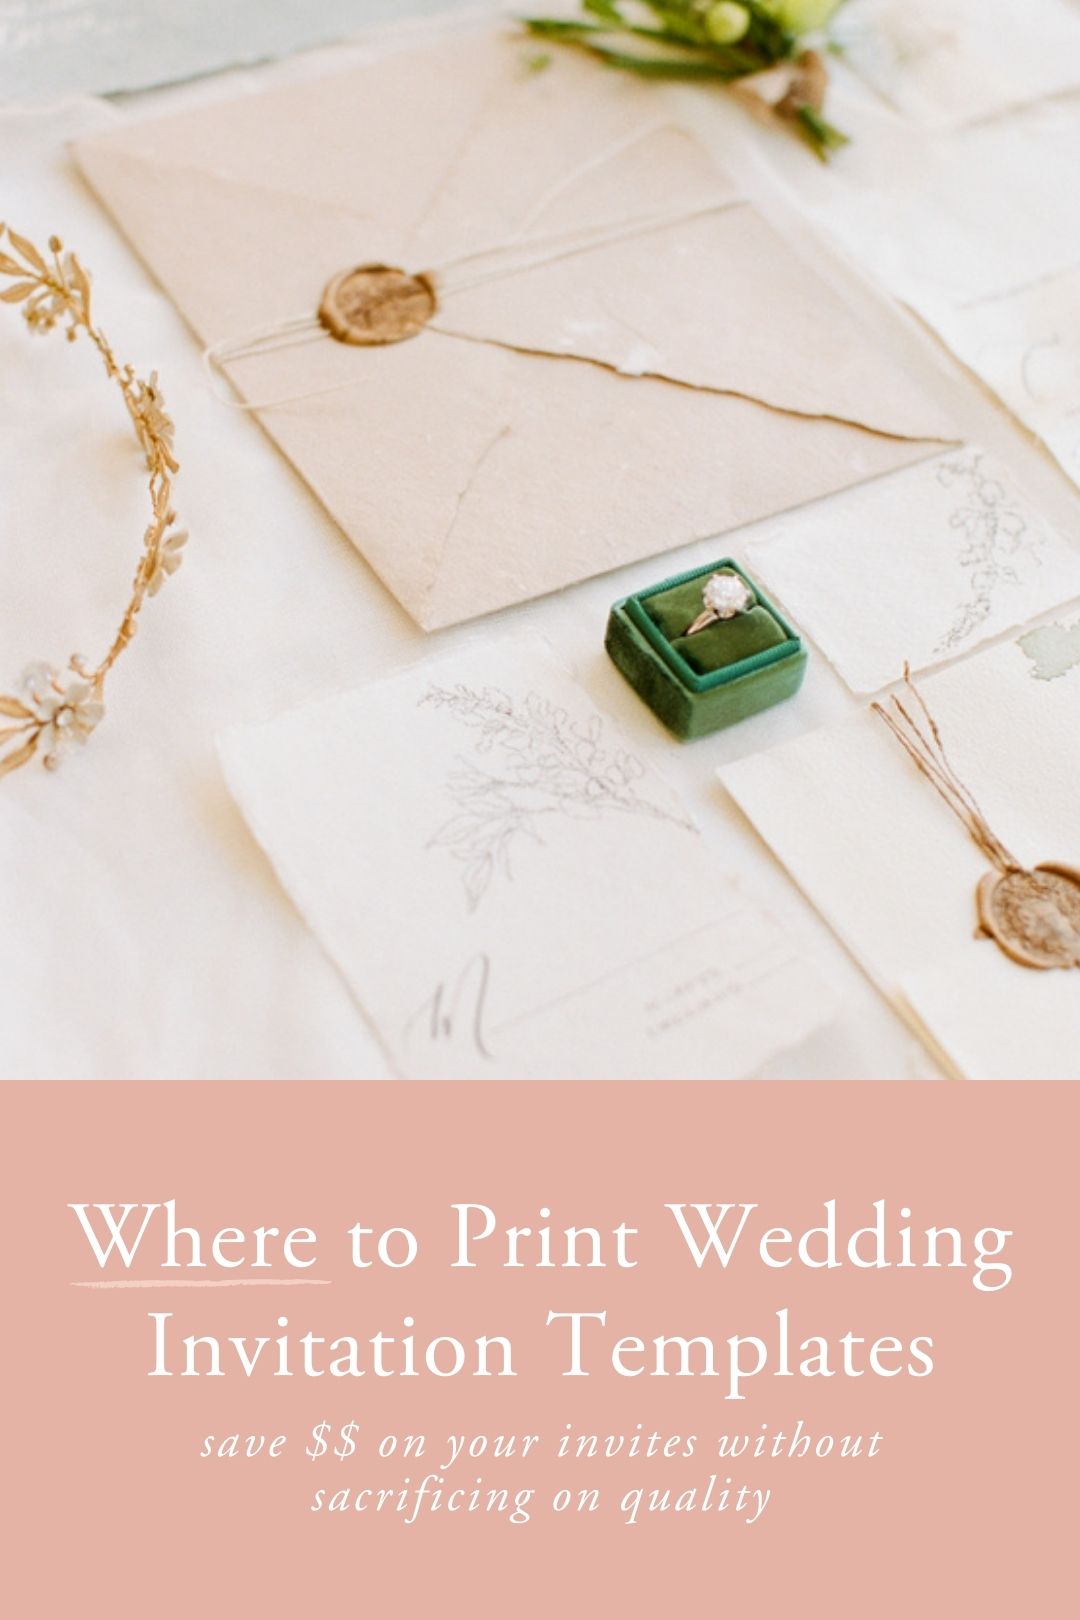 Cheapest Way To Print Wedding Invitations